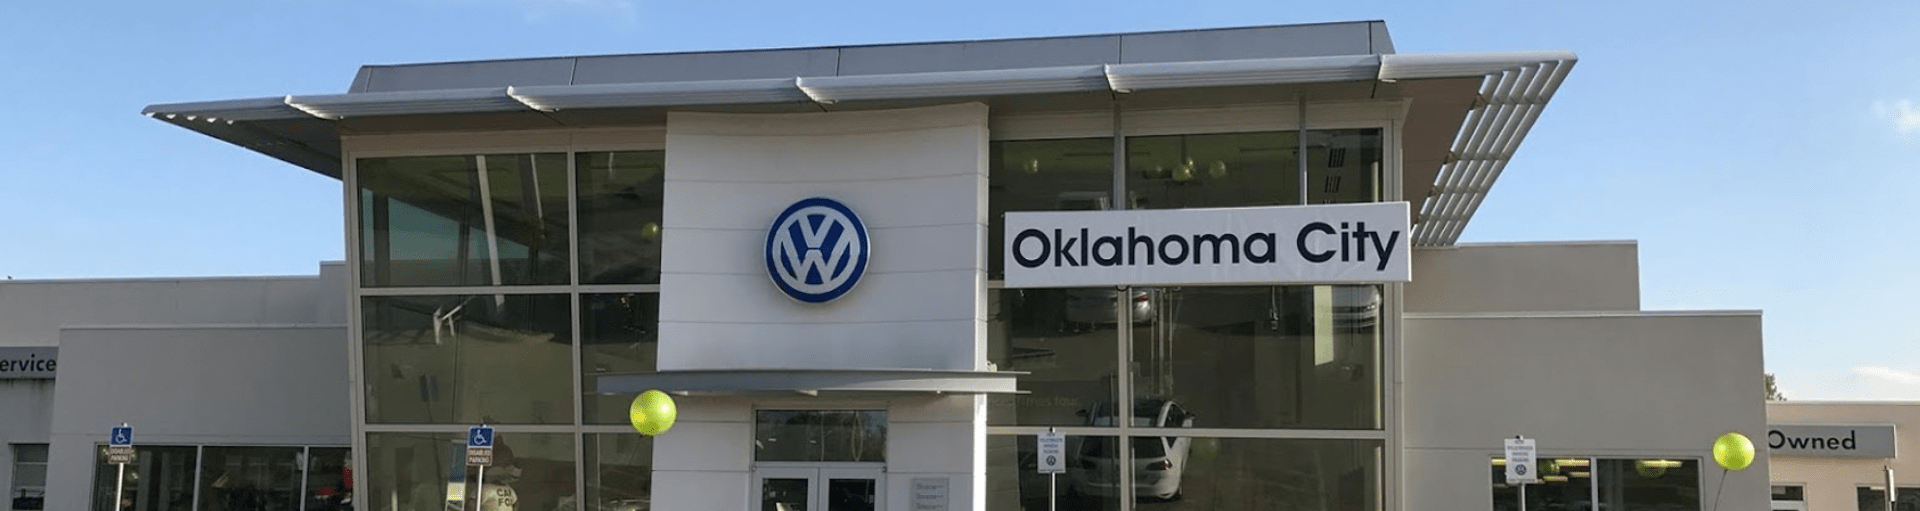 Oklahoma City Volkswagen Battery Services